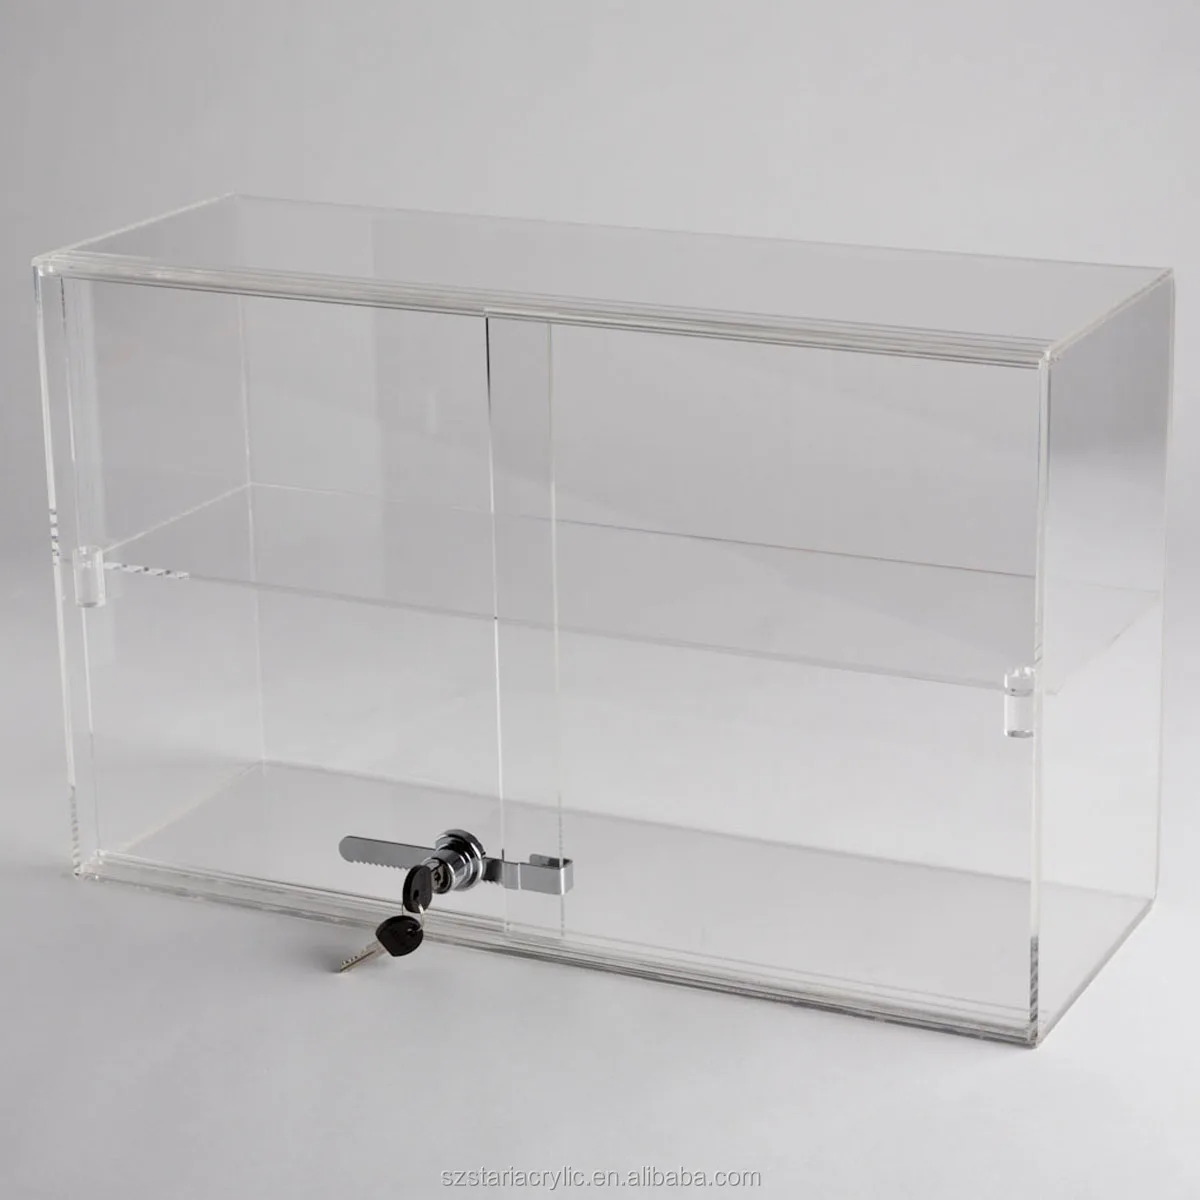 Acrylic Counter Top Display Case 12.5" x 7" x 22.5"Locking Cabinet Showcase Box 